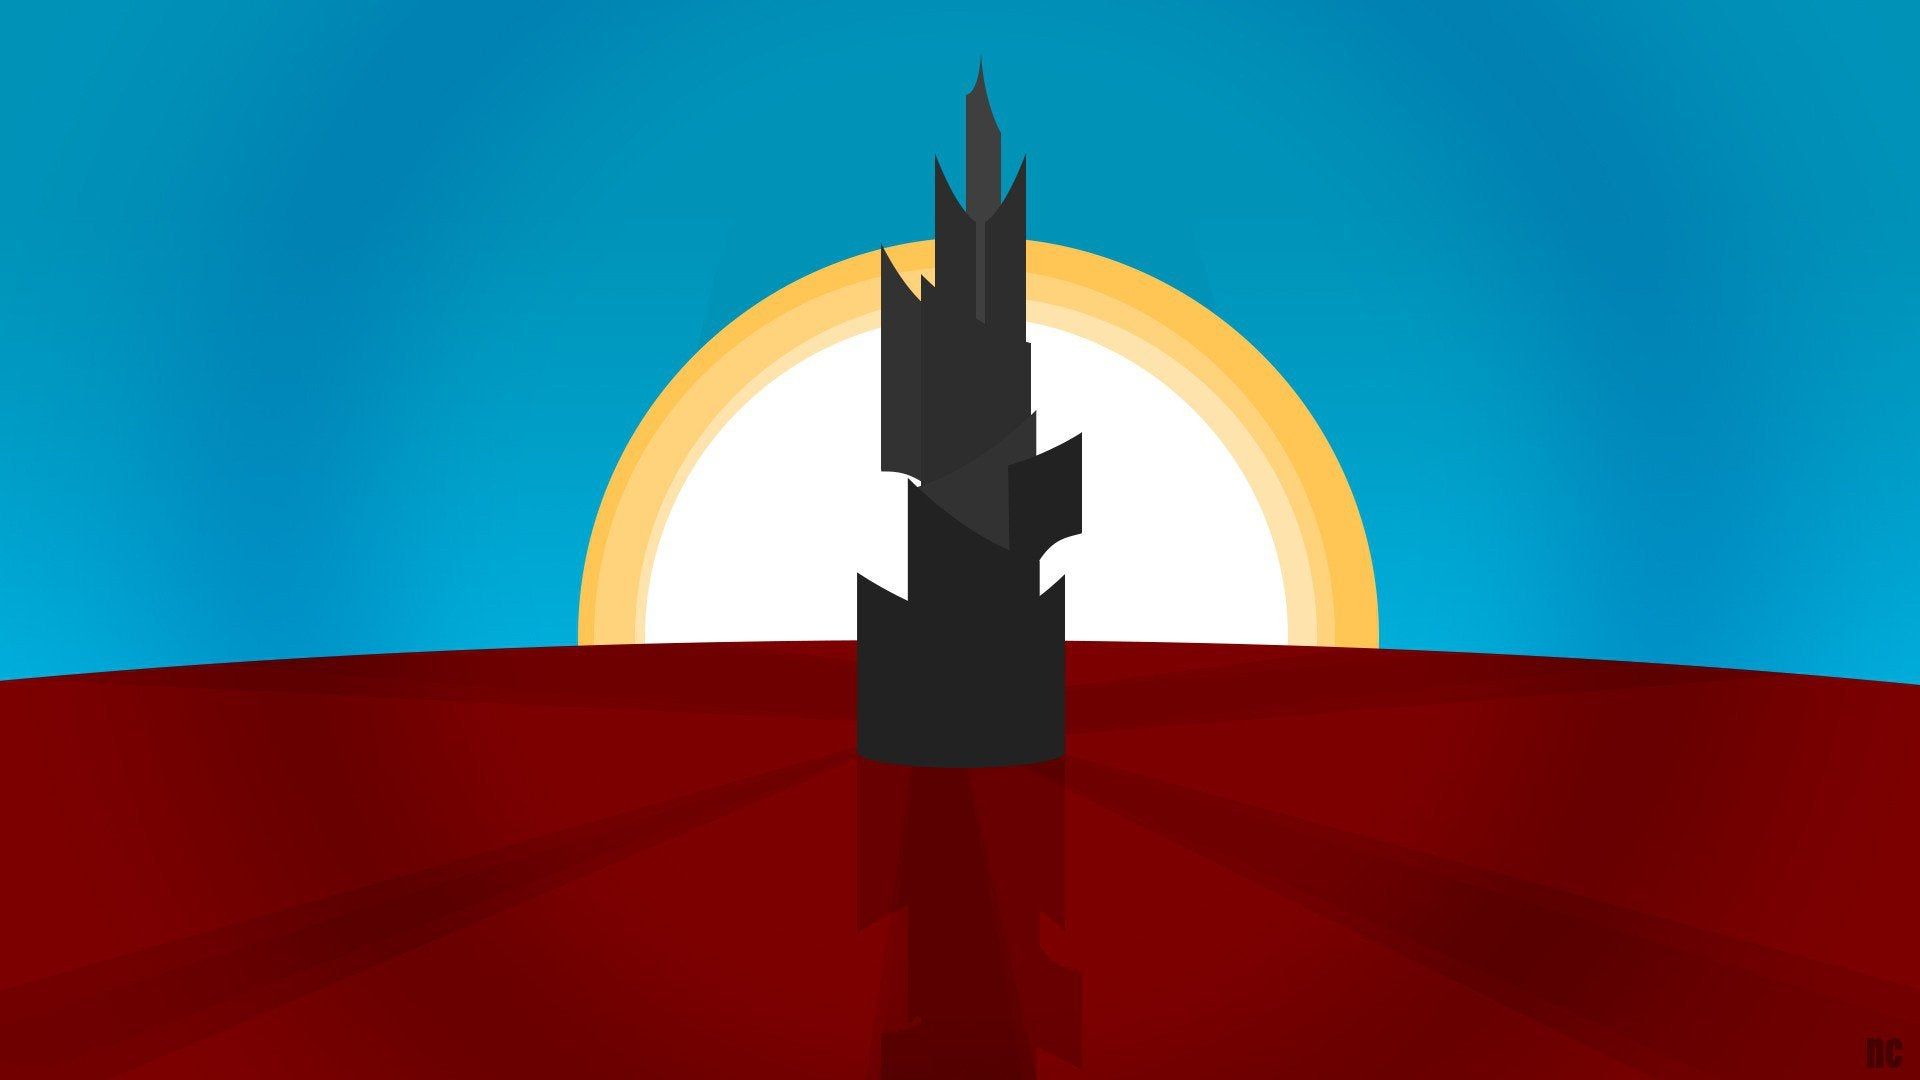 Minimalist desktop wallpaper I made, the Dark Tower